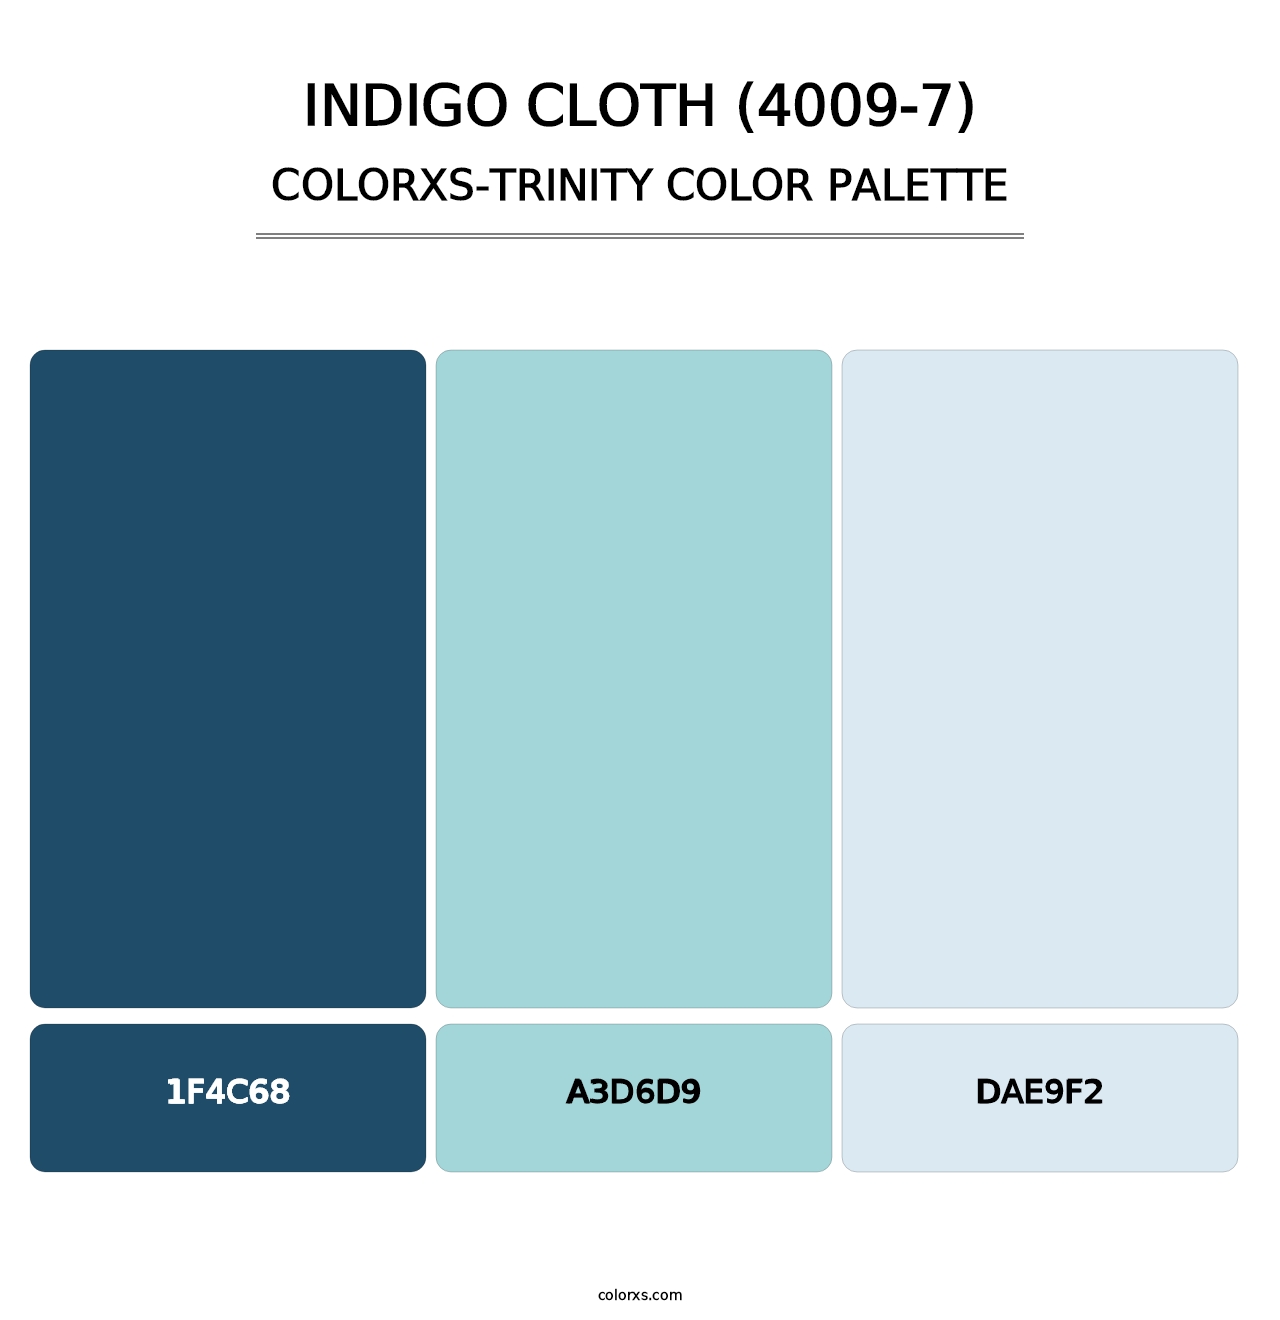 Indigo Cloth (4009-7) - Colorxs Trinity Palette